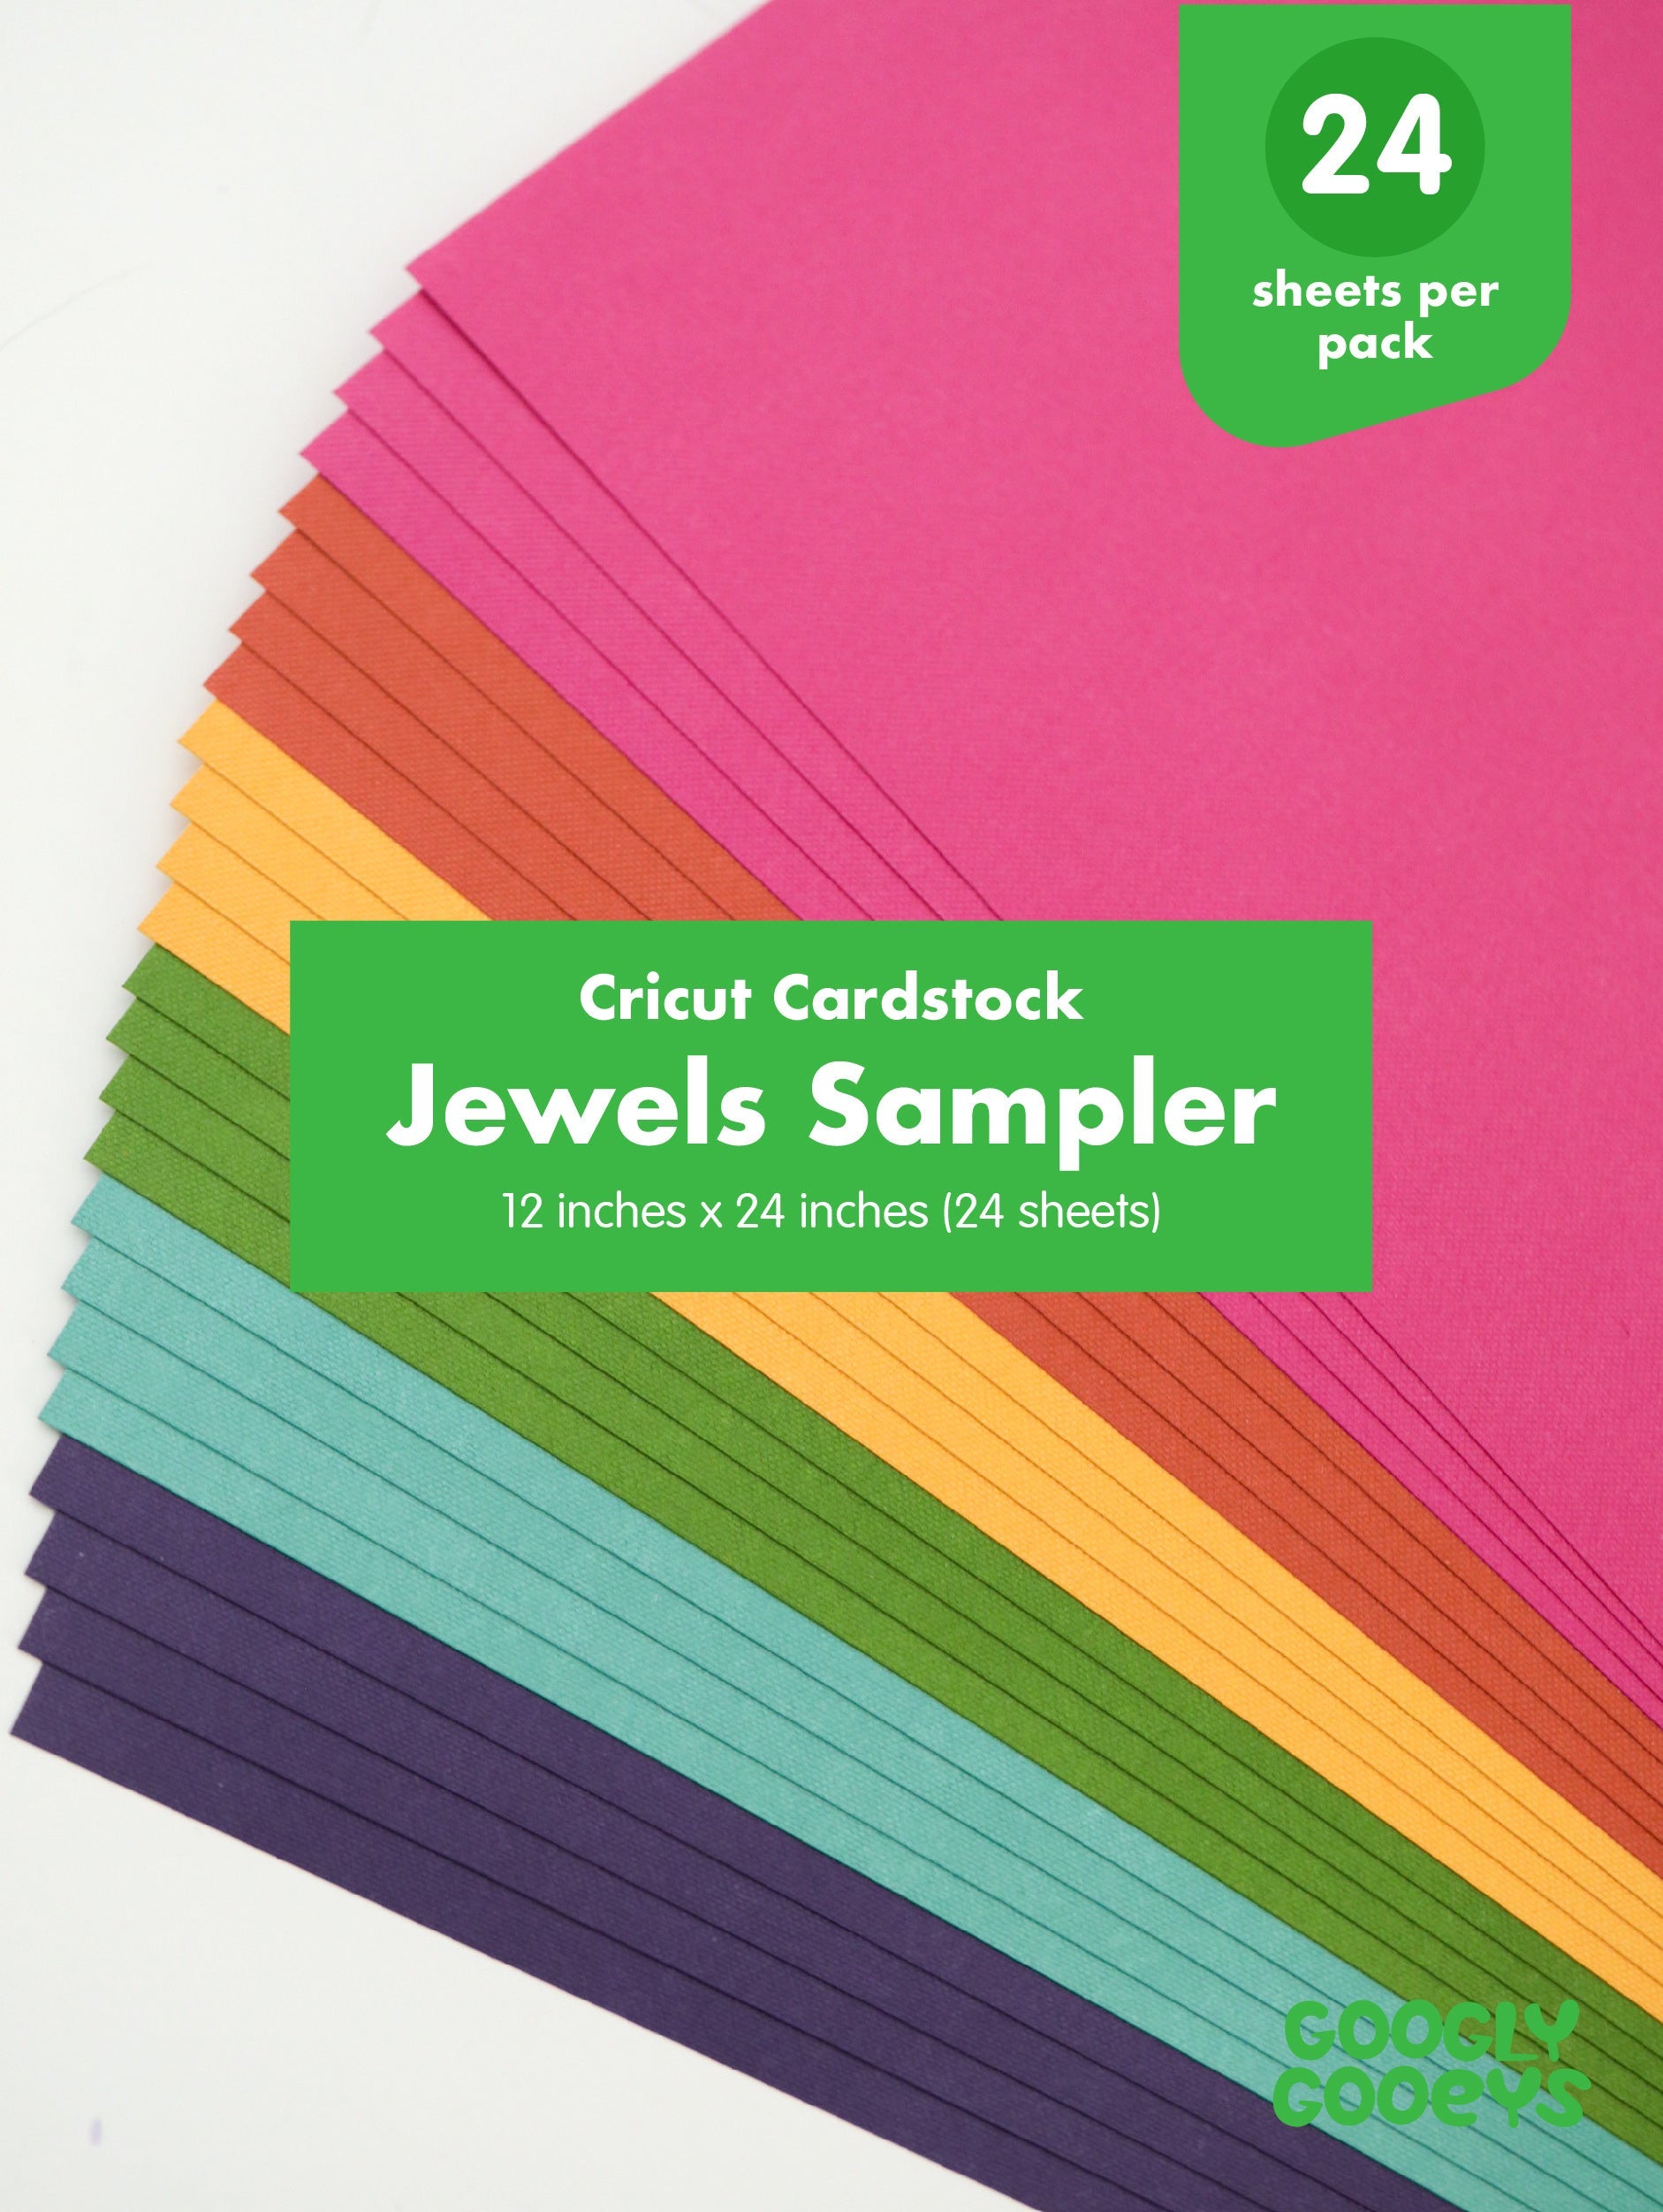 Cricut Cardstock Jewels Sampler 12x24